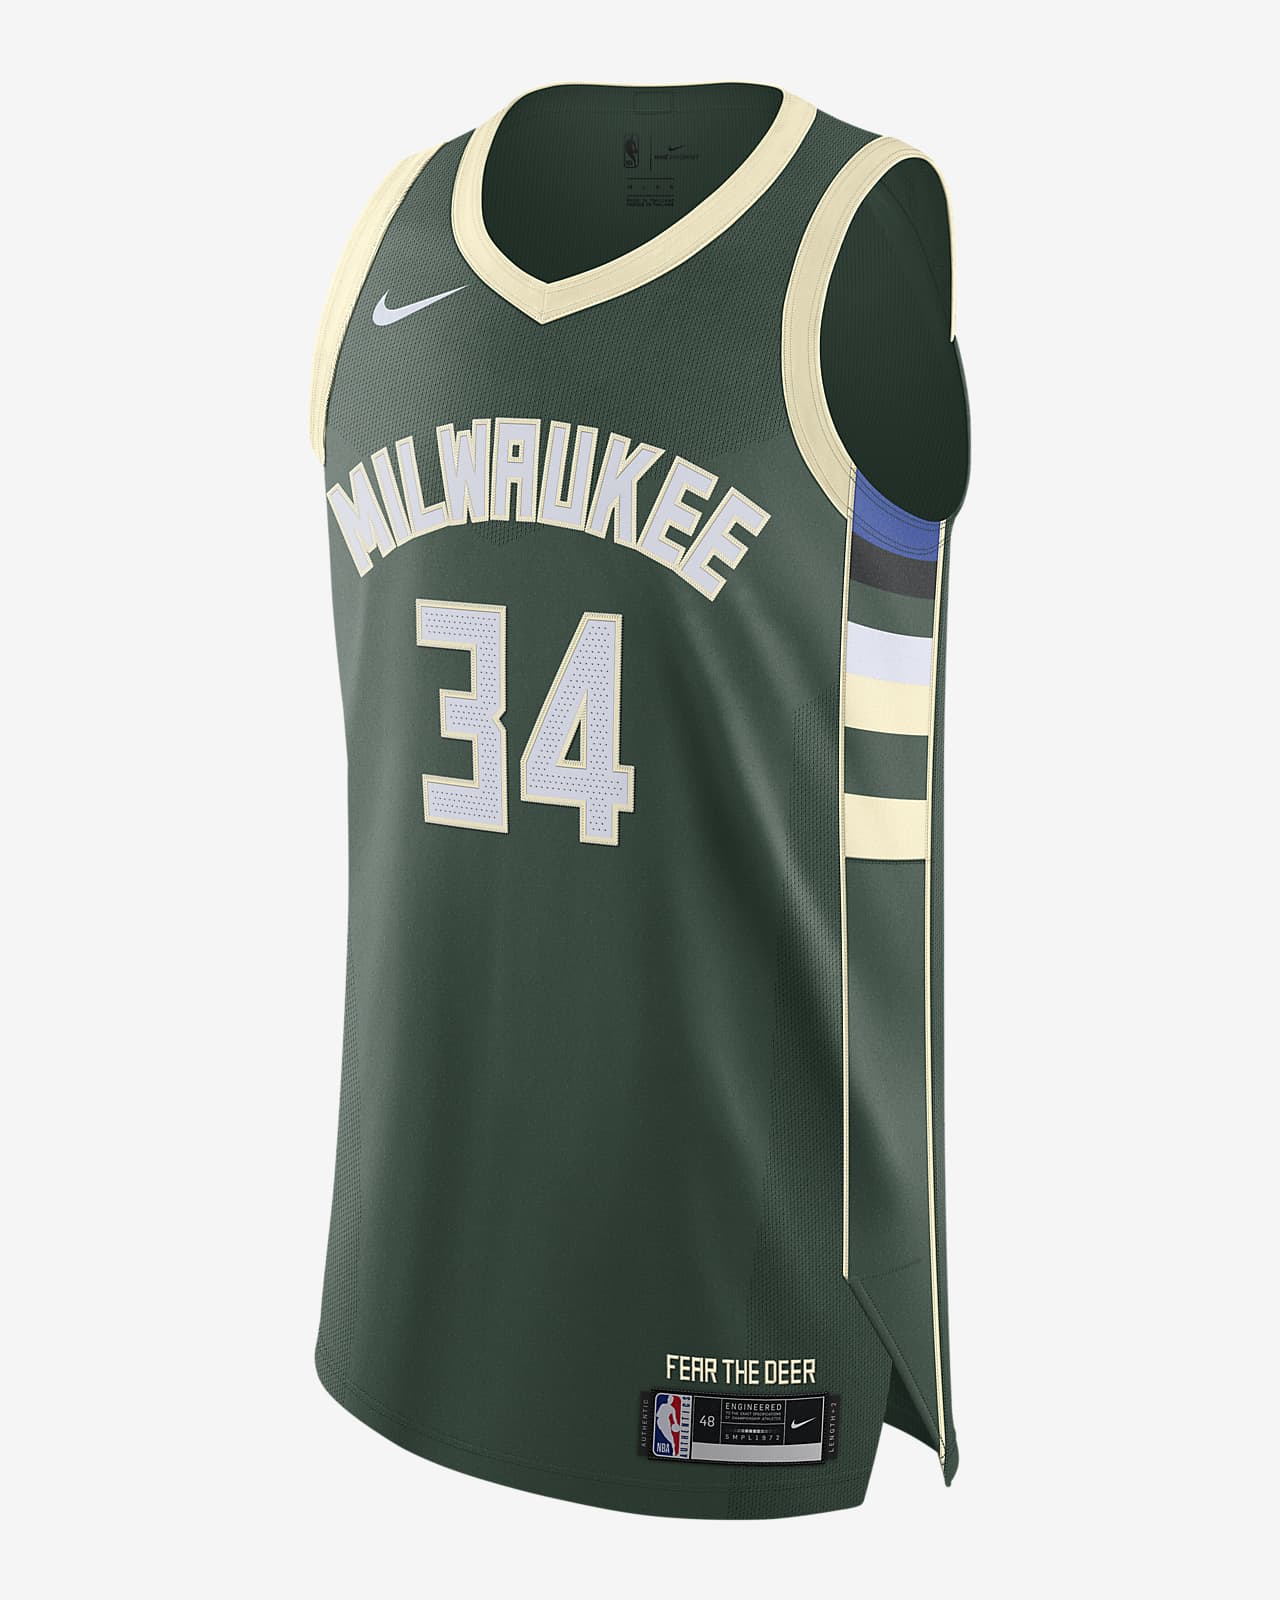 Creo que Sede combinar Giannis Antetokounmpo Bucks Icon Edition 2020 Camiseta Nike NBA Authentic.  Nike ES